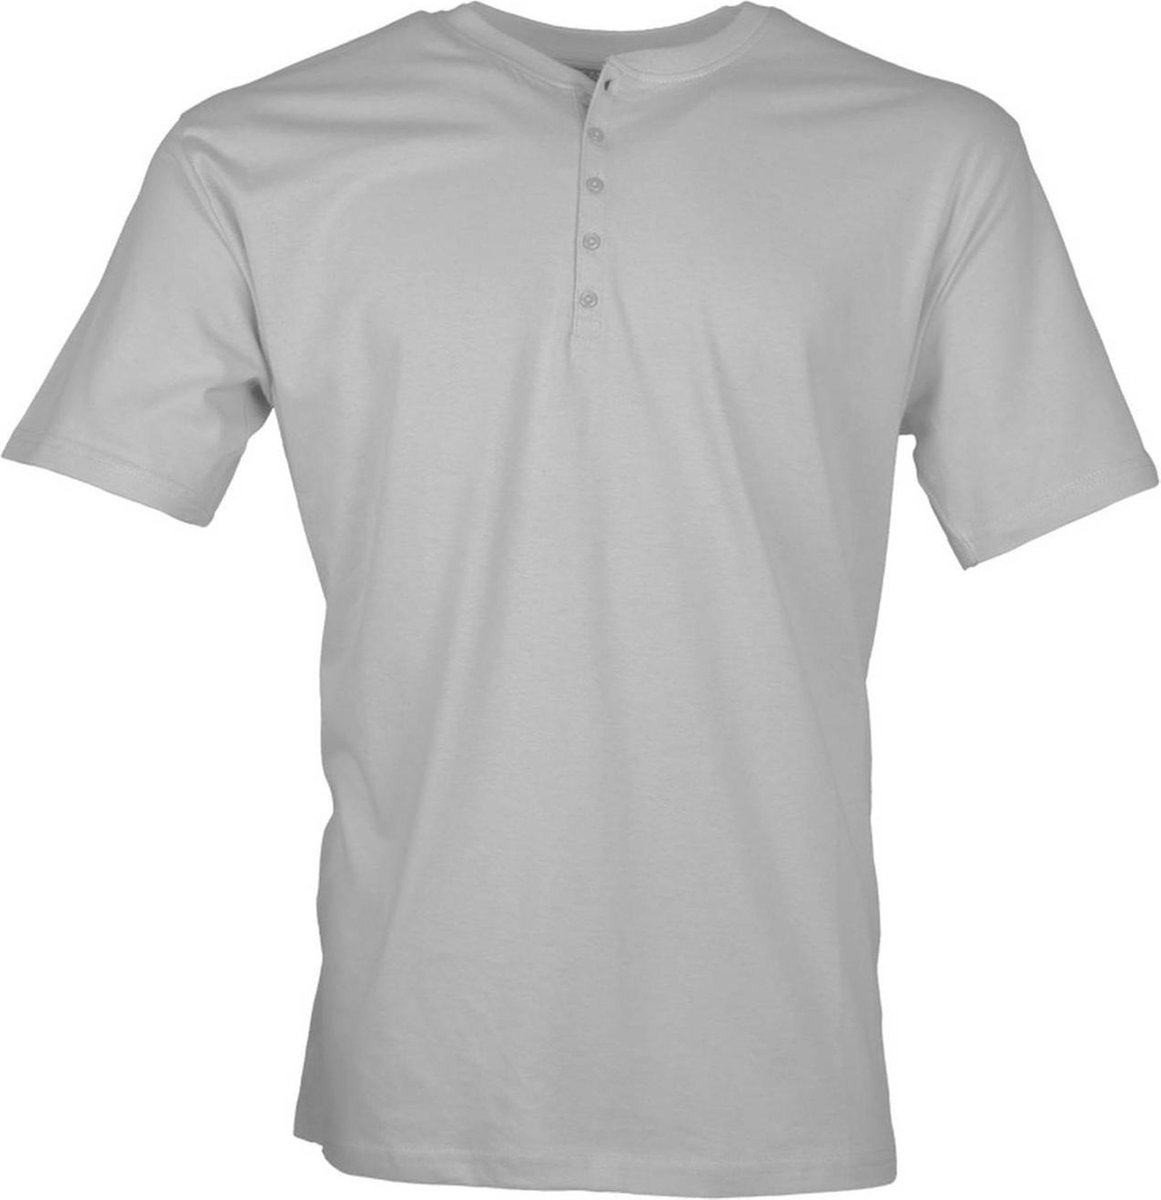 Losan Basic - Heren T-Shirt - Korte Mouw - Ronde Hals - Knoopjes - Grijs - Maat L